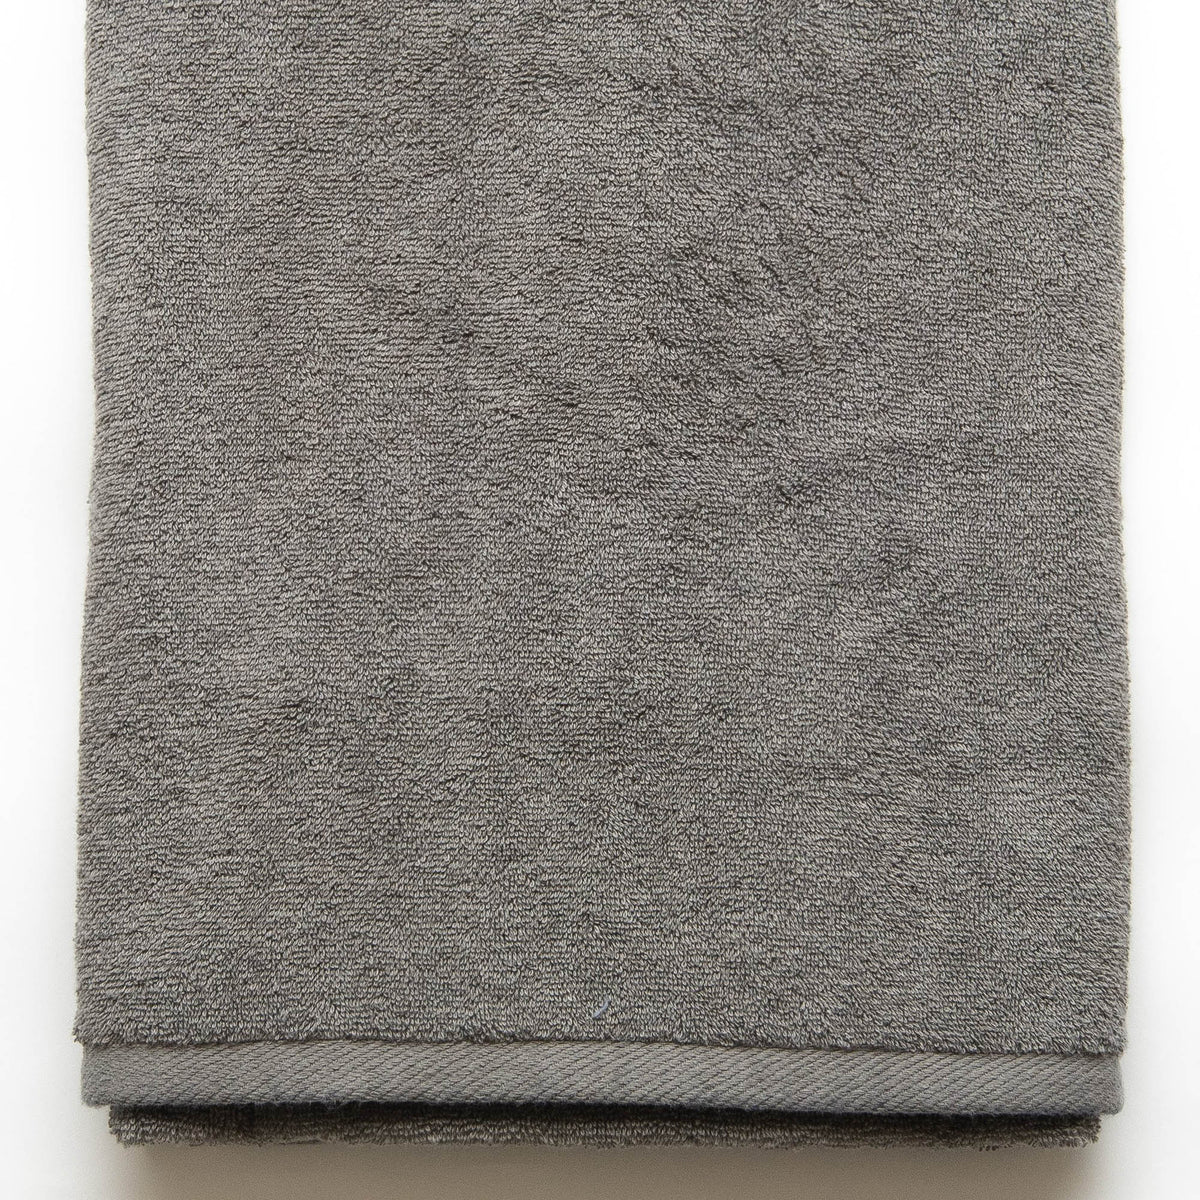 100% Cotton Beach &amp; Pool Towels - Gray - American Blanket Company